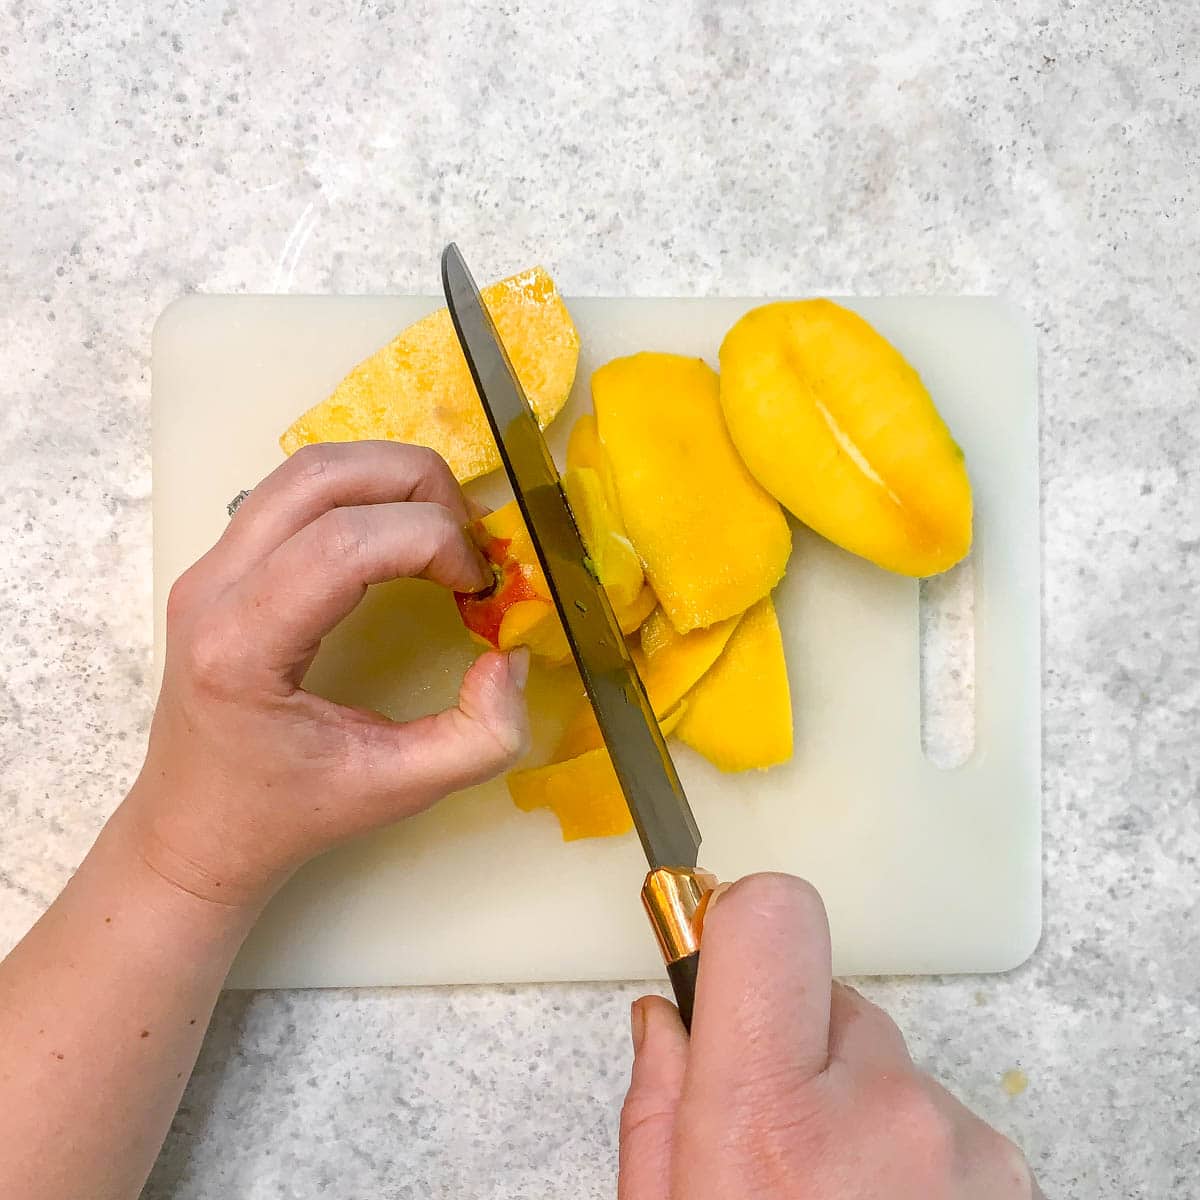 Hands cutting a mango.